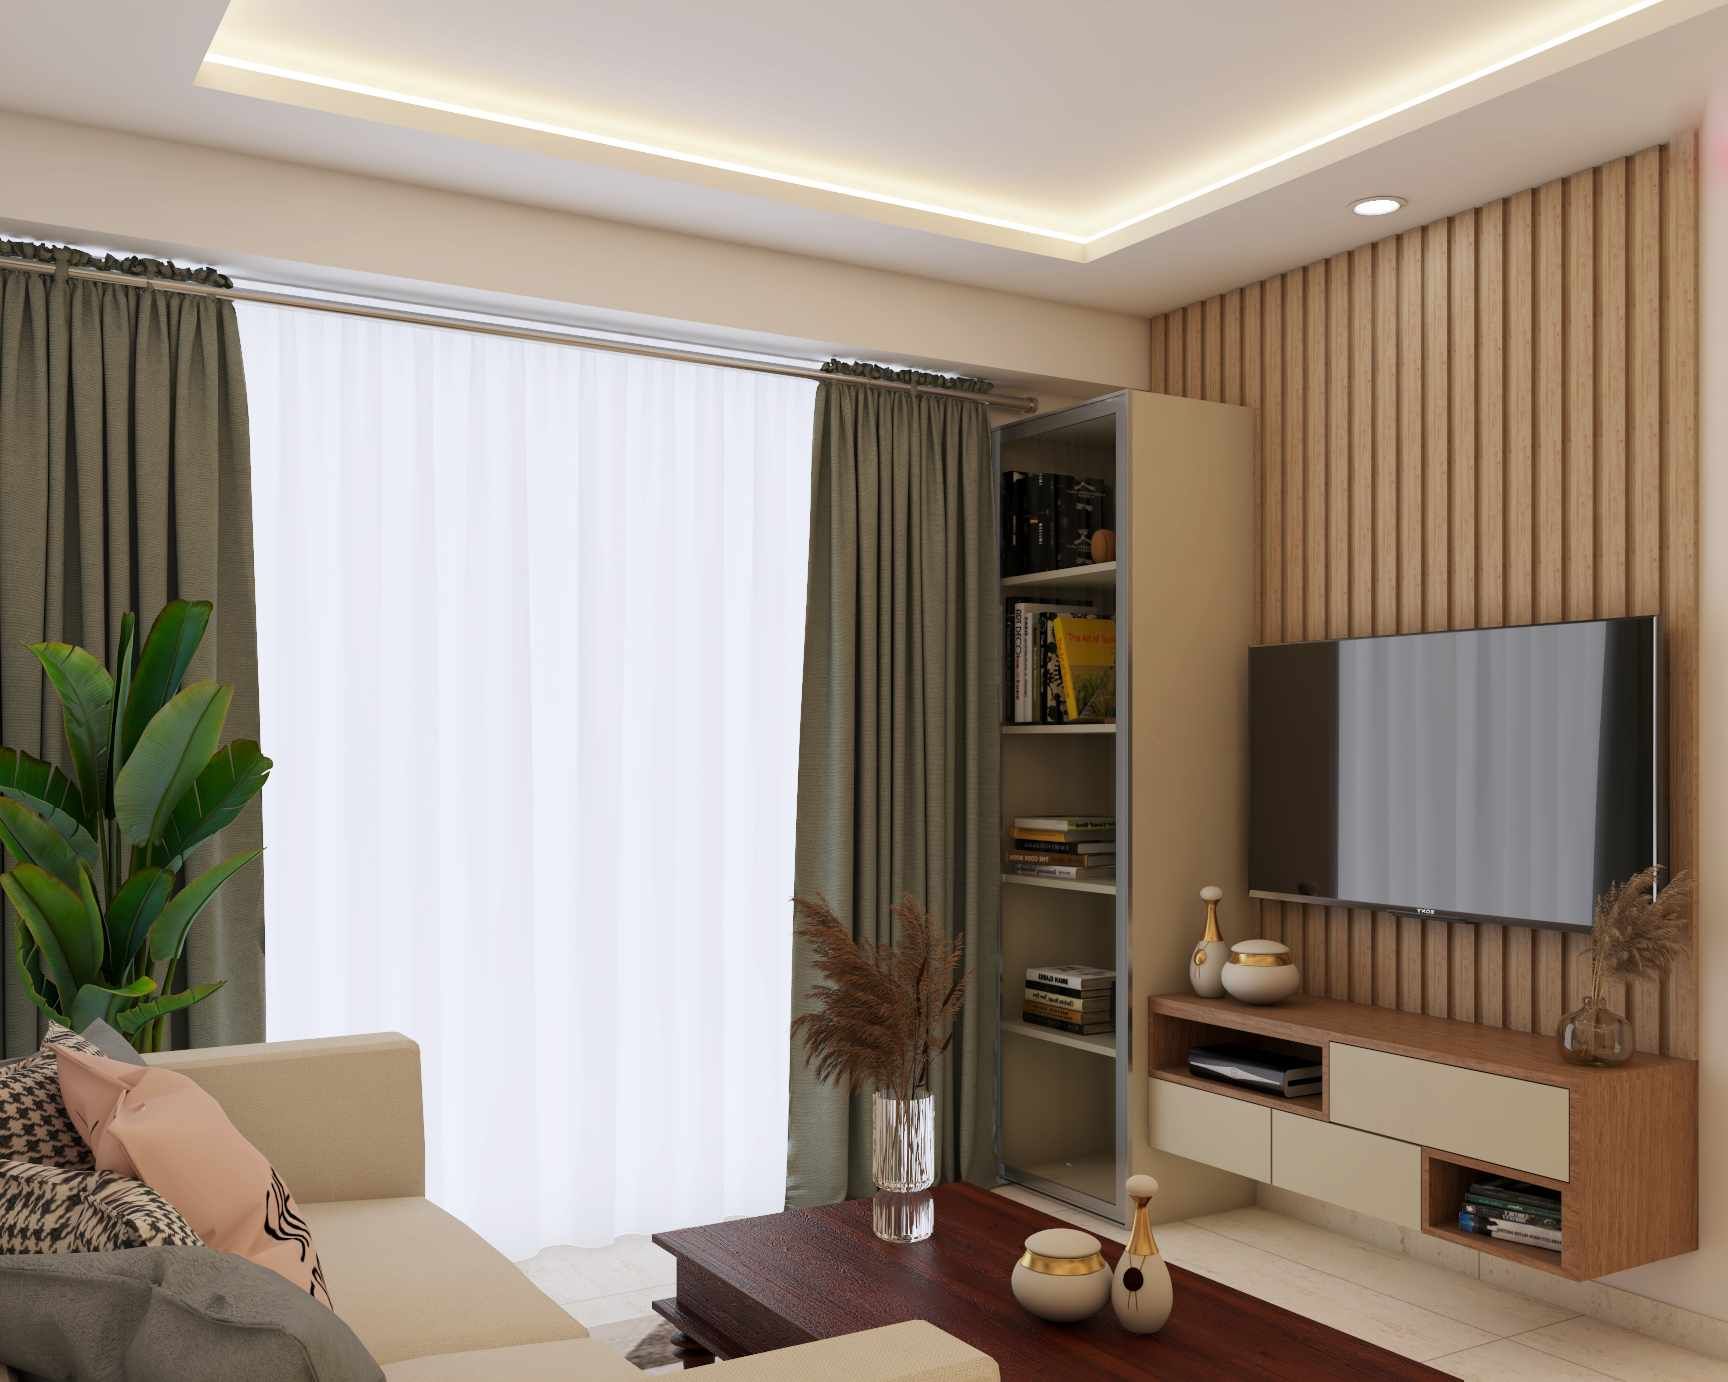 Compact TV Unit Design With Vertical Wooden Panels | Livspace